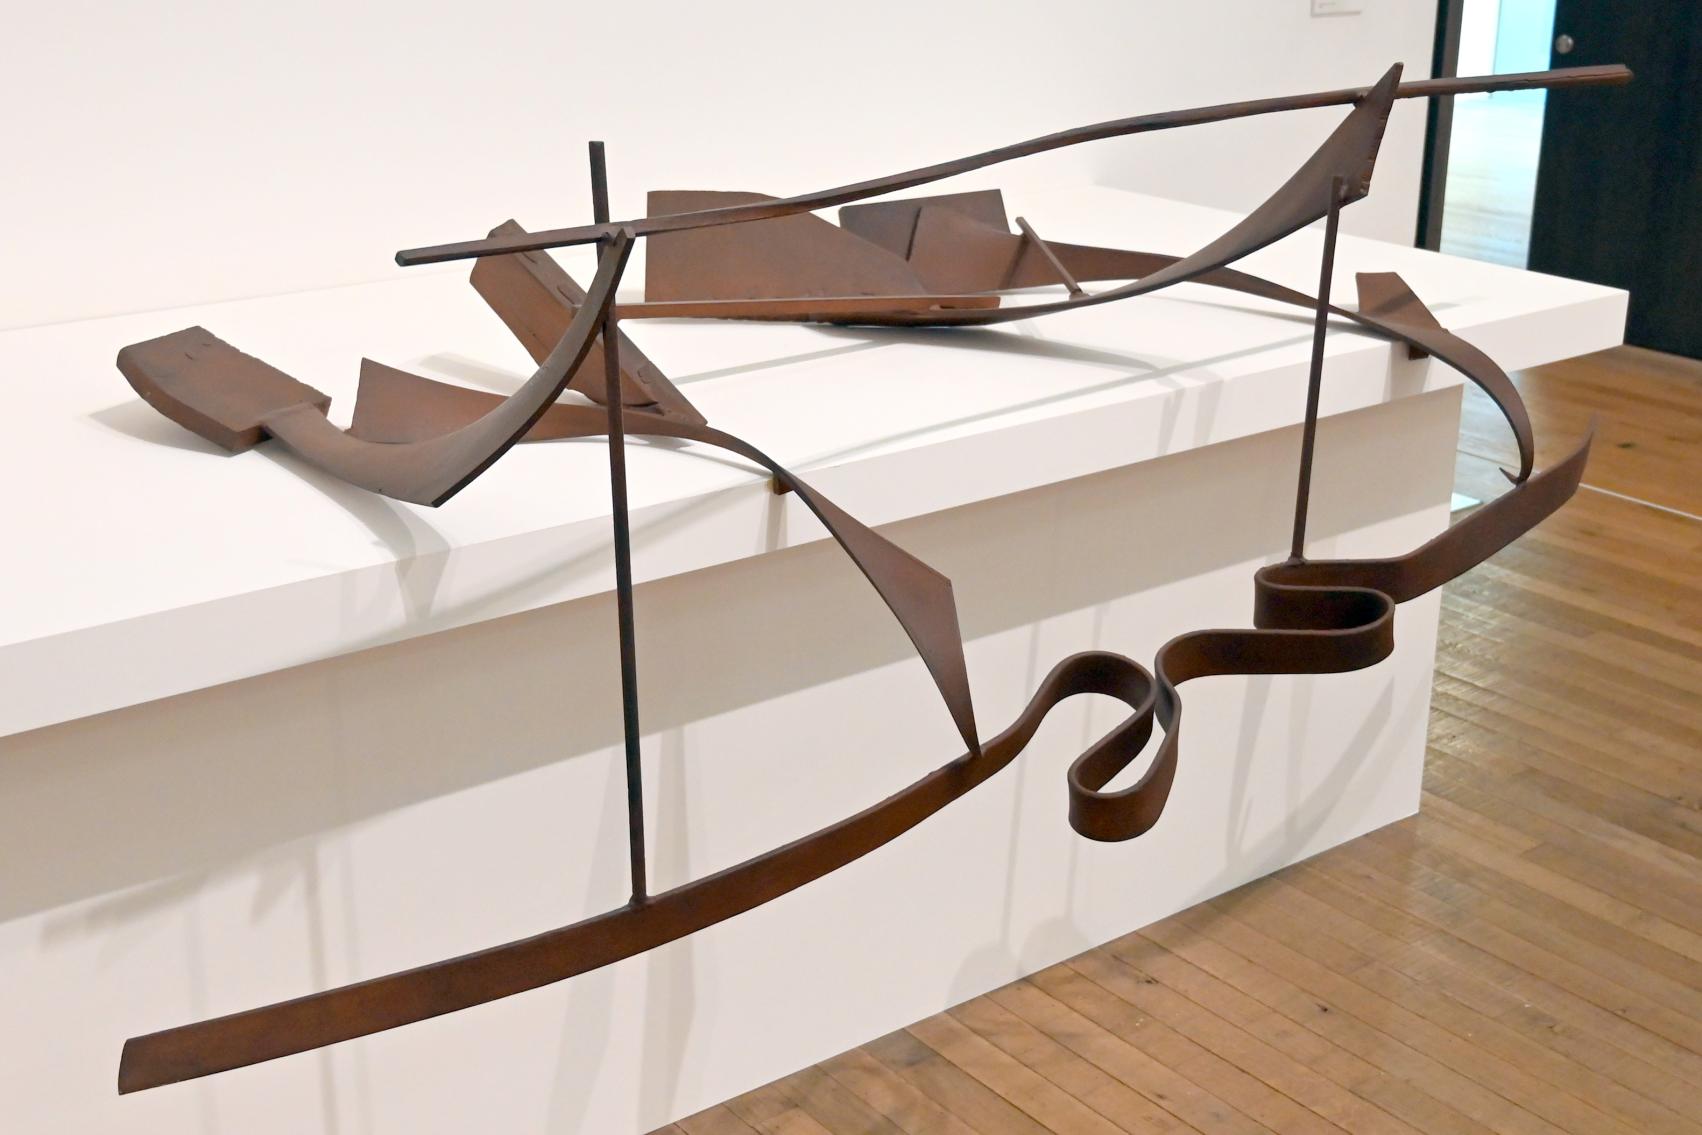 Anthony Caro (1975–2010), Tischstück CCLXVI, London, Tate Gallery of Modern Art (Tate Modern), In the Studio 2, 1975, Bild 3/4